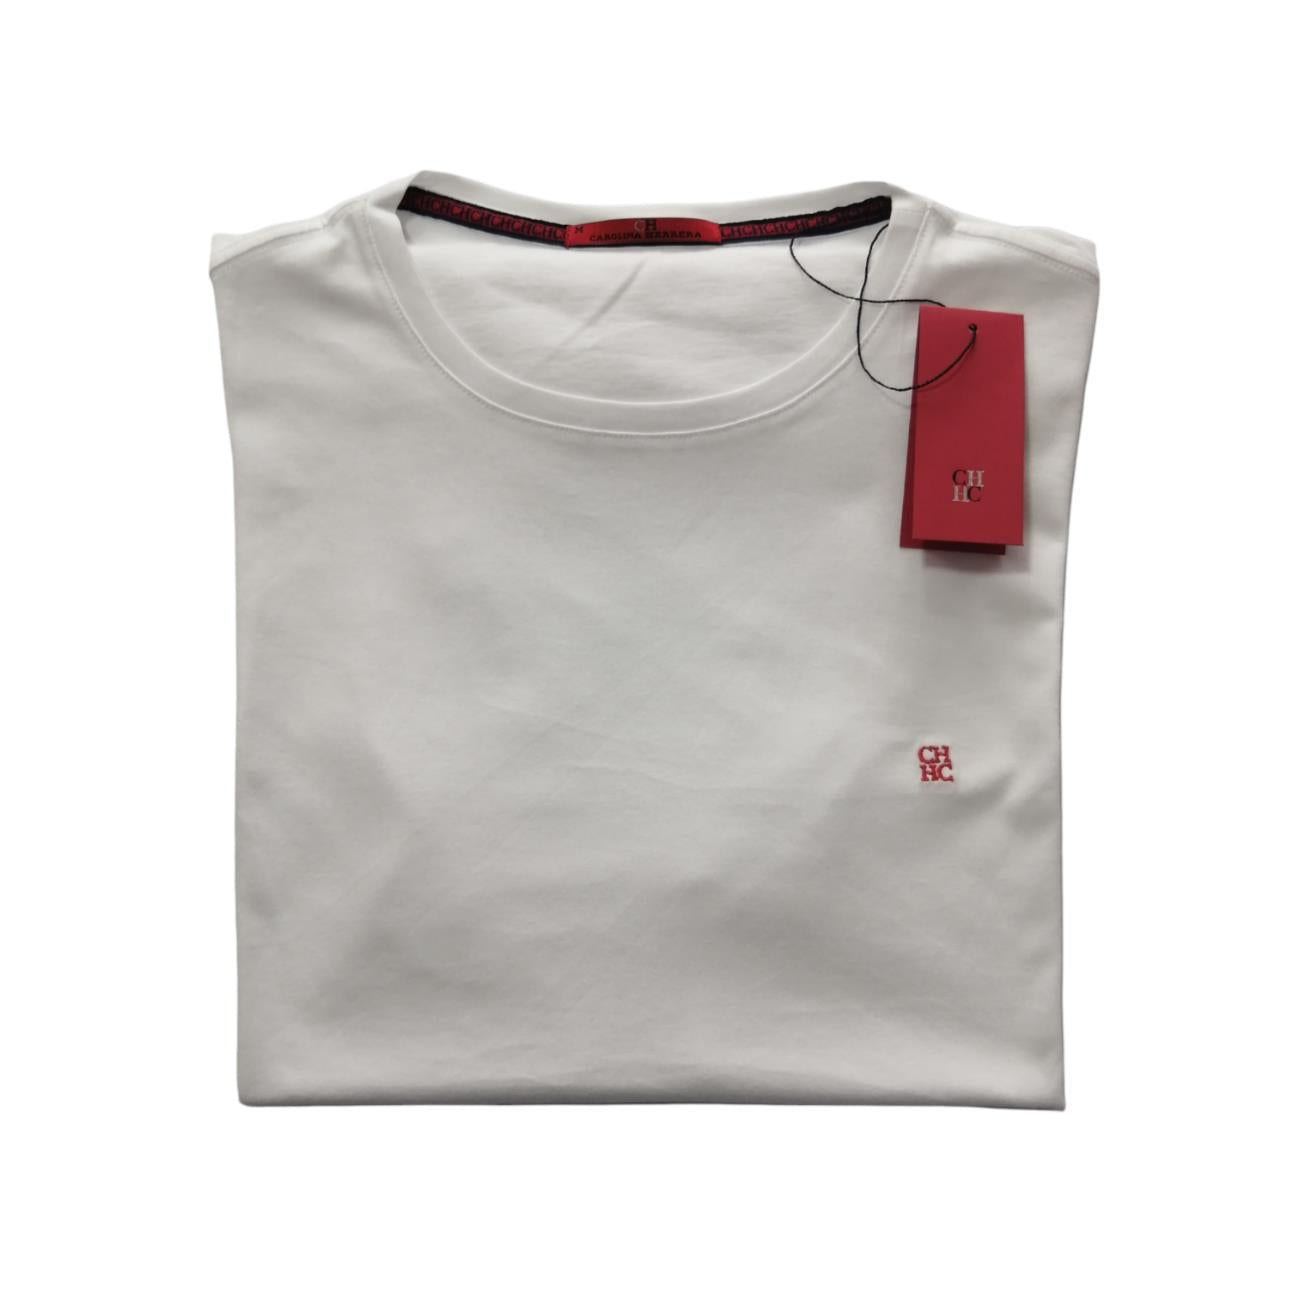 Camiseta cuello redondo manga corta color blanco Carolina Herrera